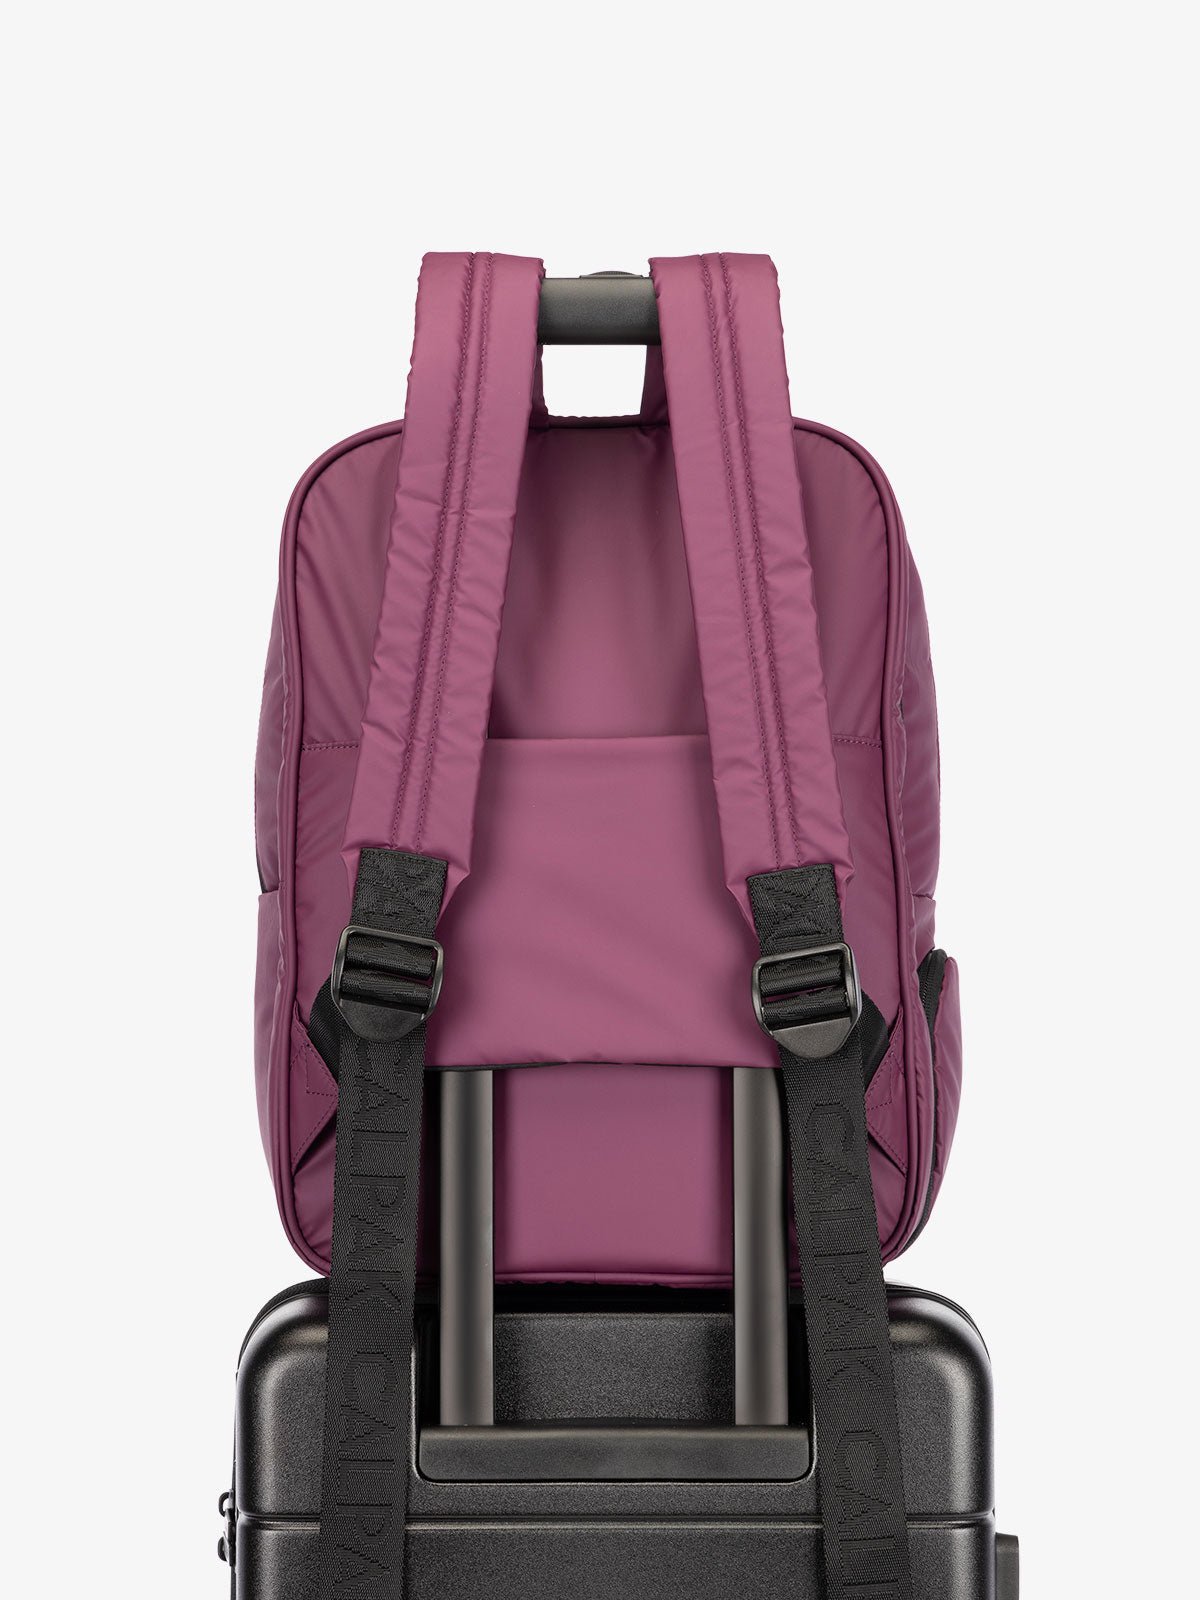 CALPAK water resistant Luka Laptop Backpack with adjustable shoulder straps and trolley sleeve in purple plum